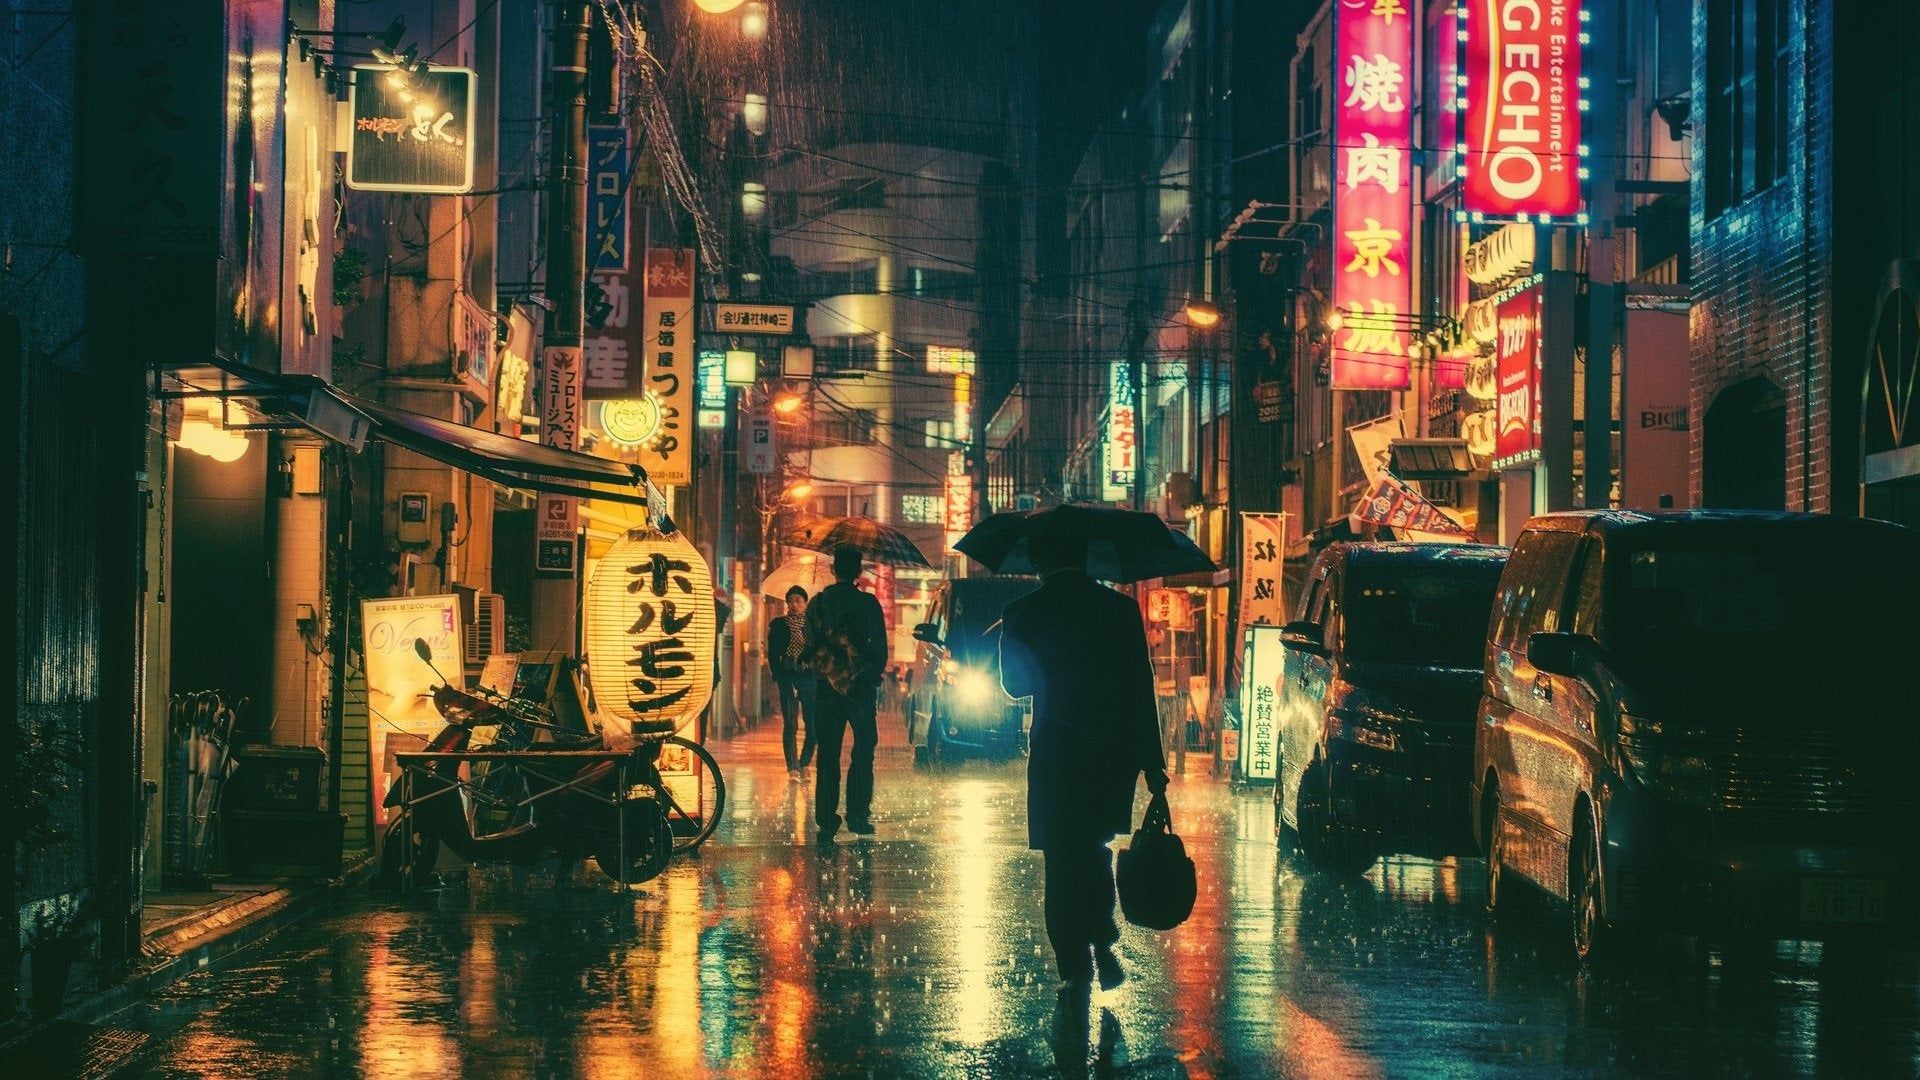 City Nights in Japan